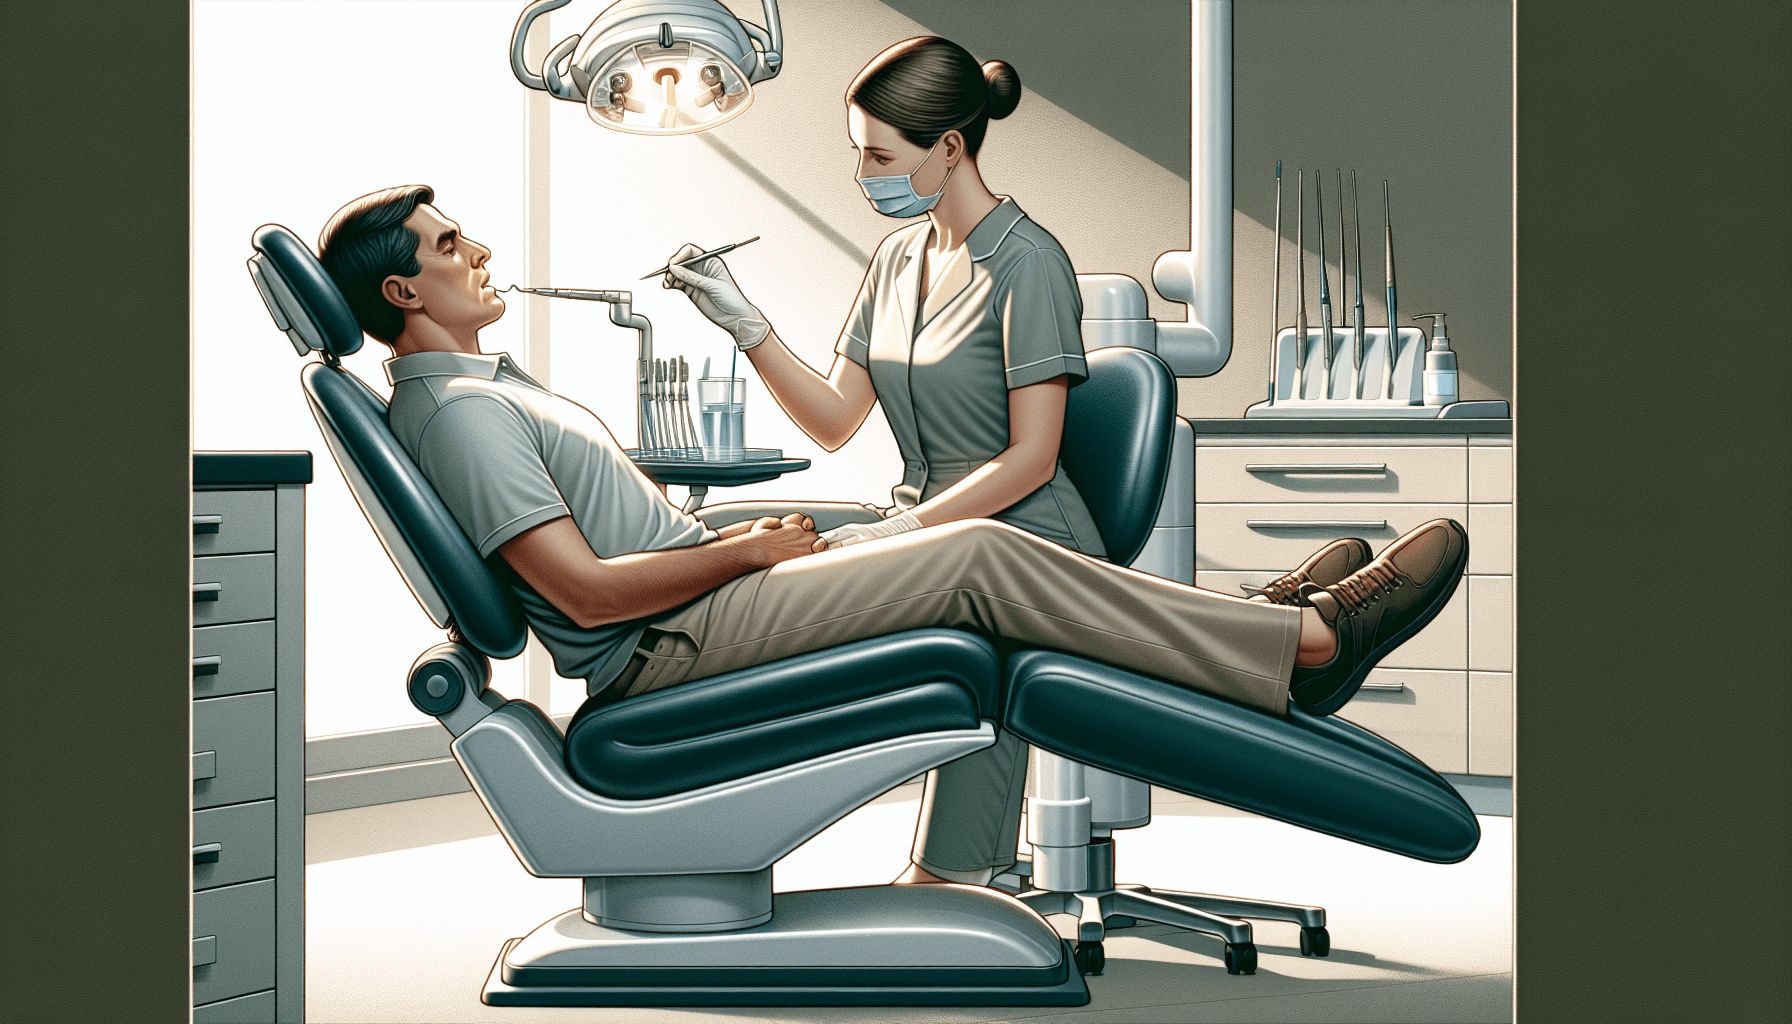 Illustration of a dental procedure being enhanced by oral sedation